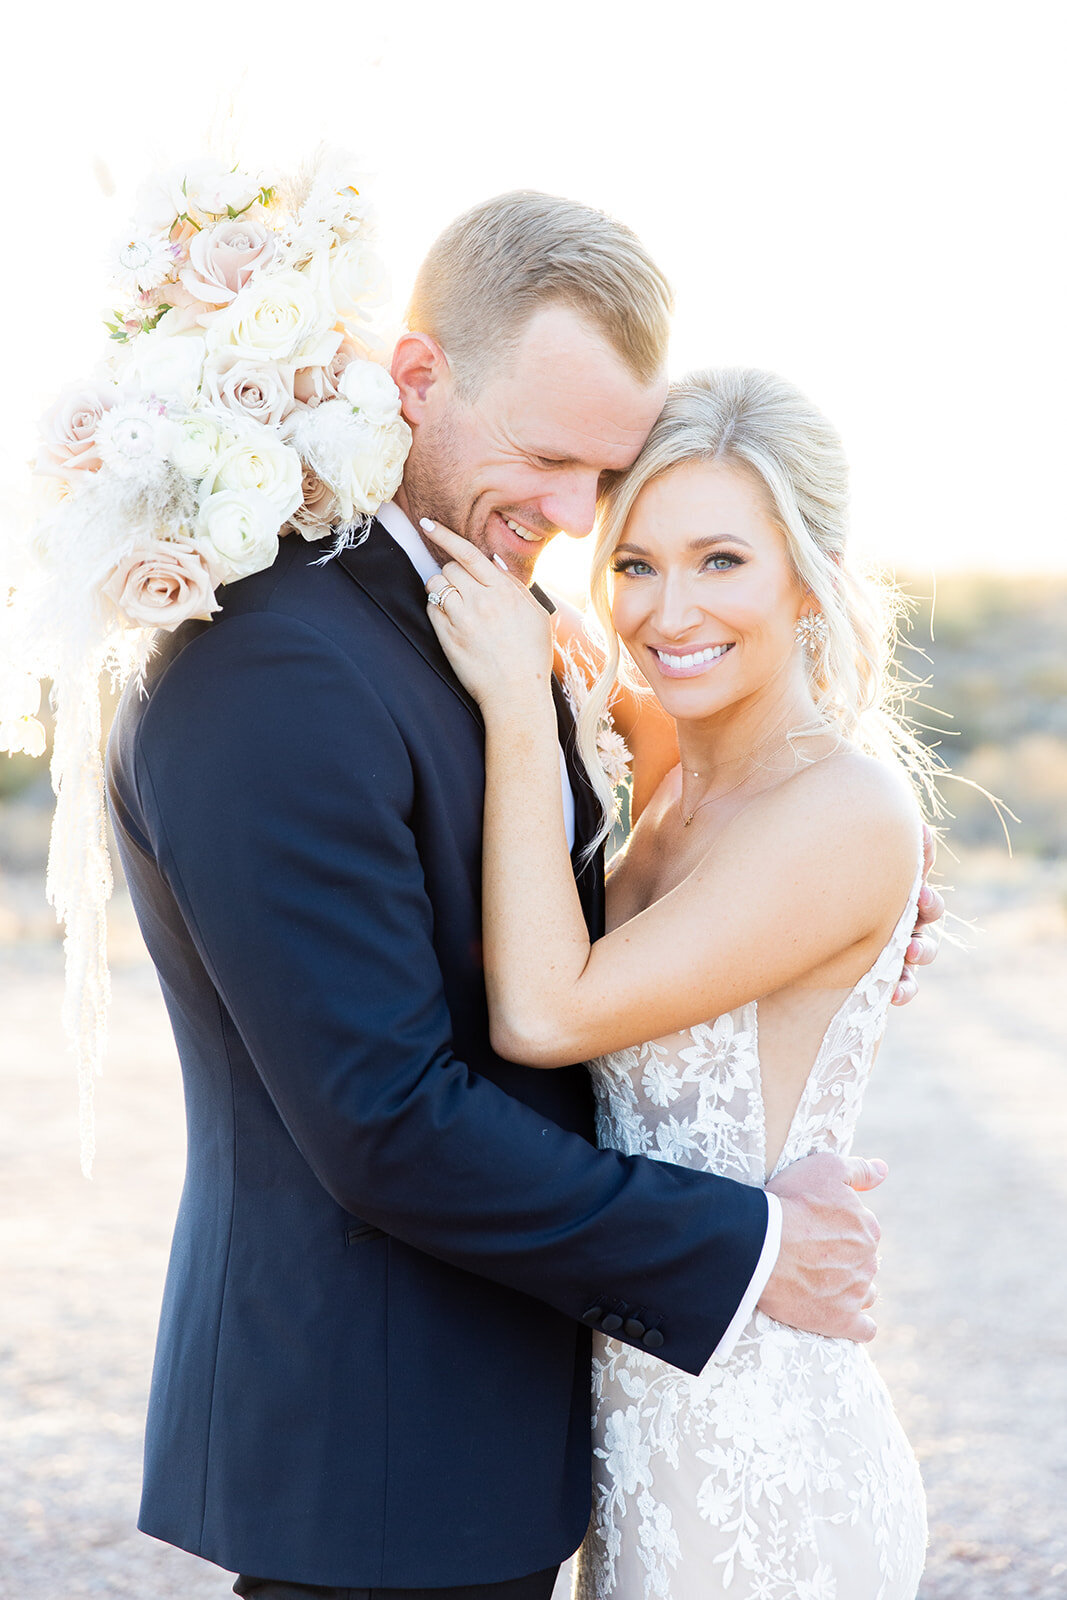 Karlie Colleen Photography - Ashley & Grant Wedding - The Paseo - Phoenix Arizona-825